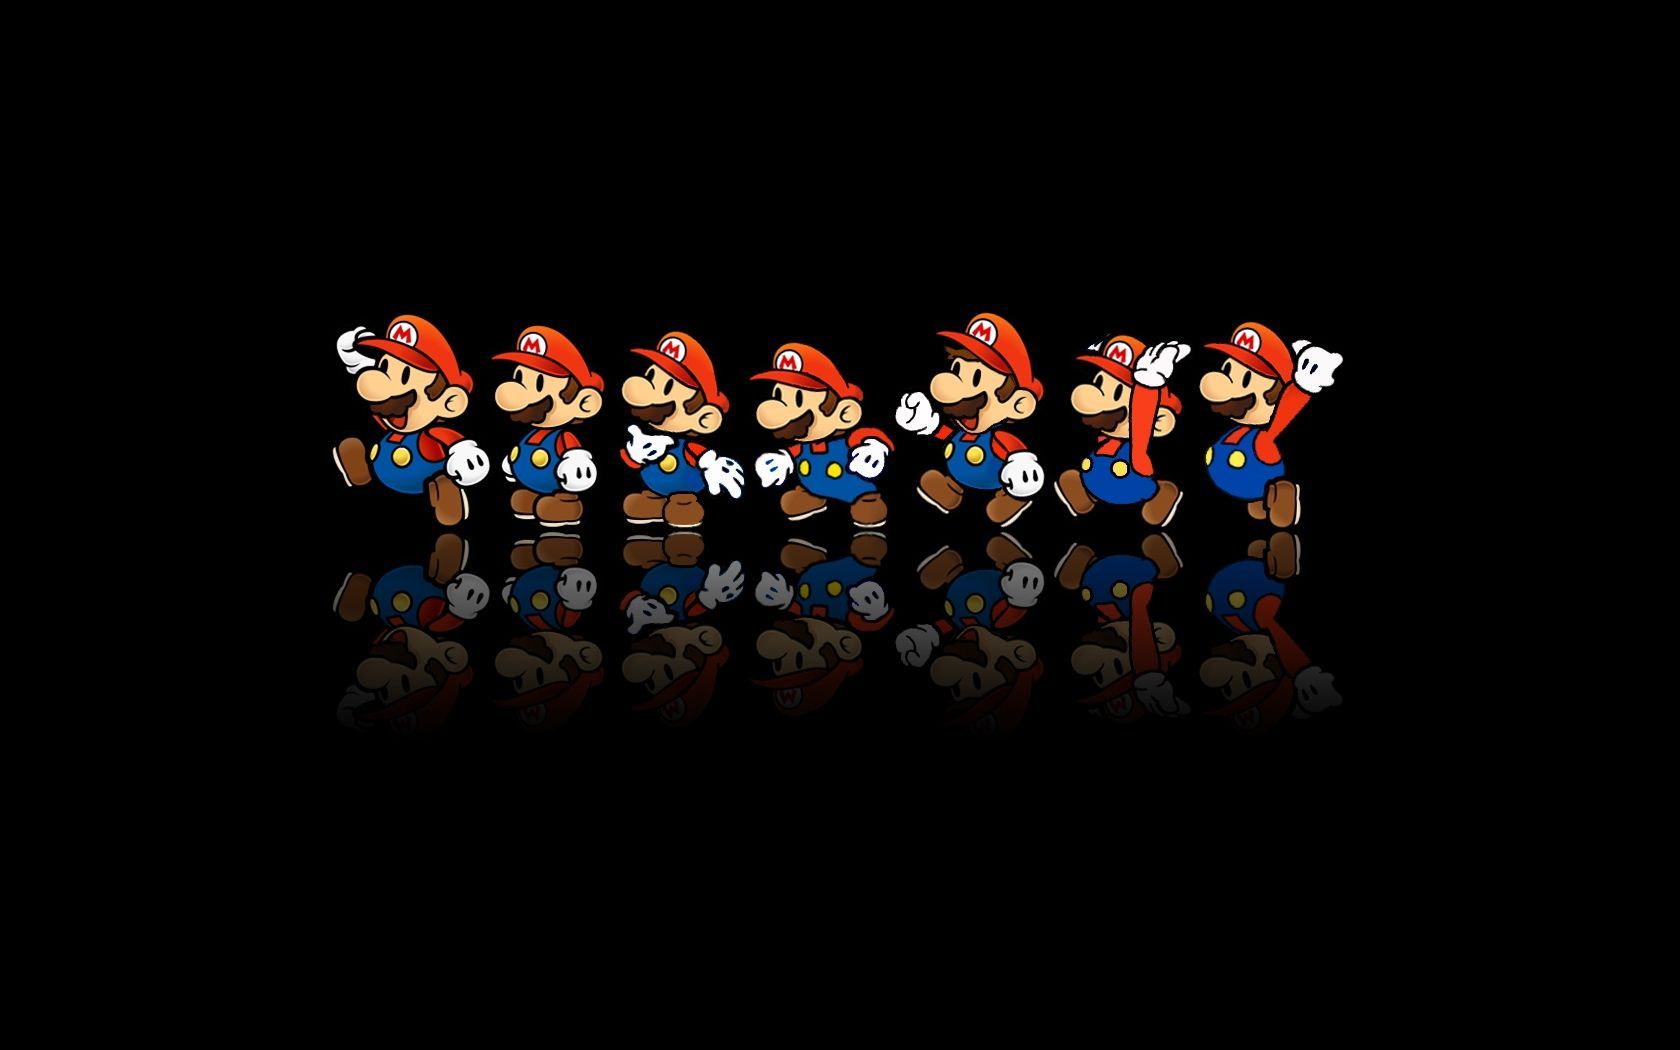 Fondos de pantalla de Mario Bros - FondosMil